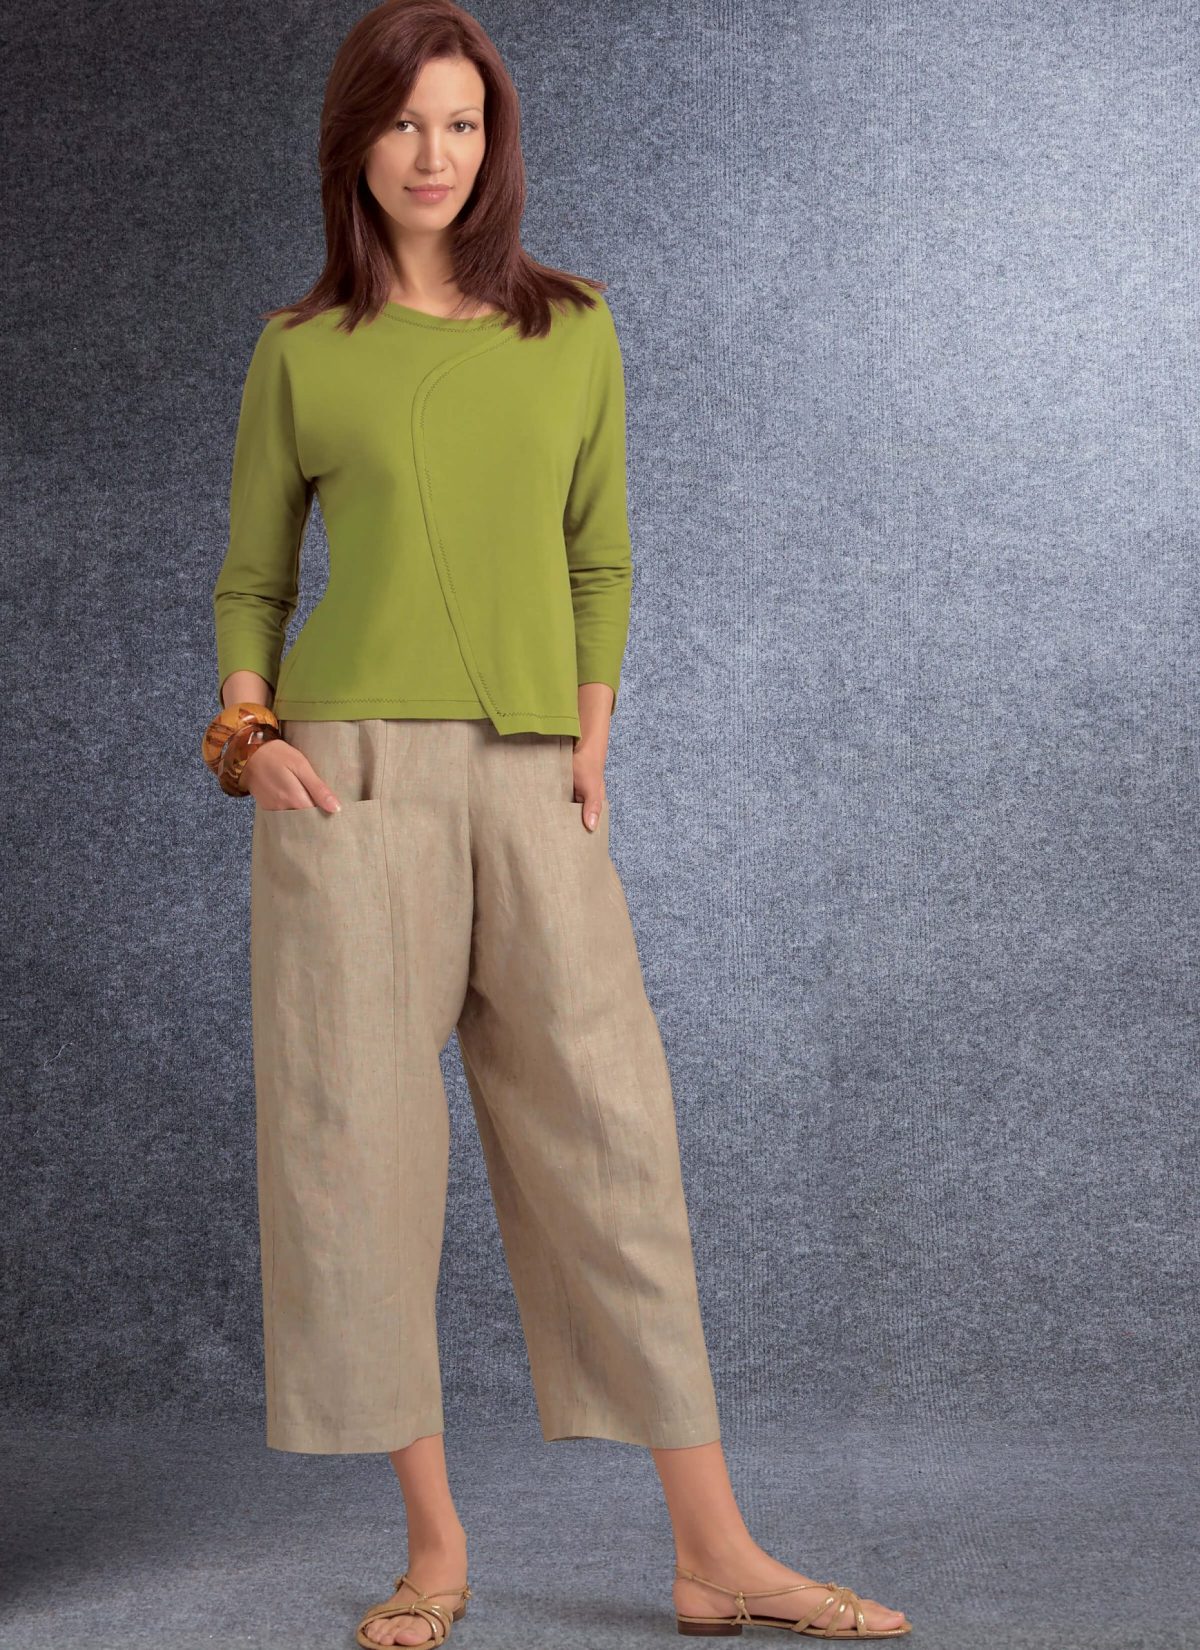 Vogue Patterns V1731 Misses' Deep-Pocket Skirt and Trousers Marcy Tilton